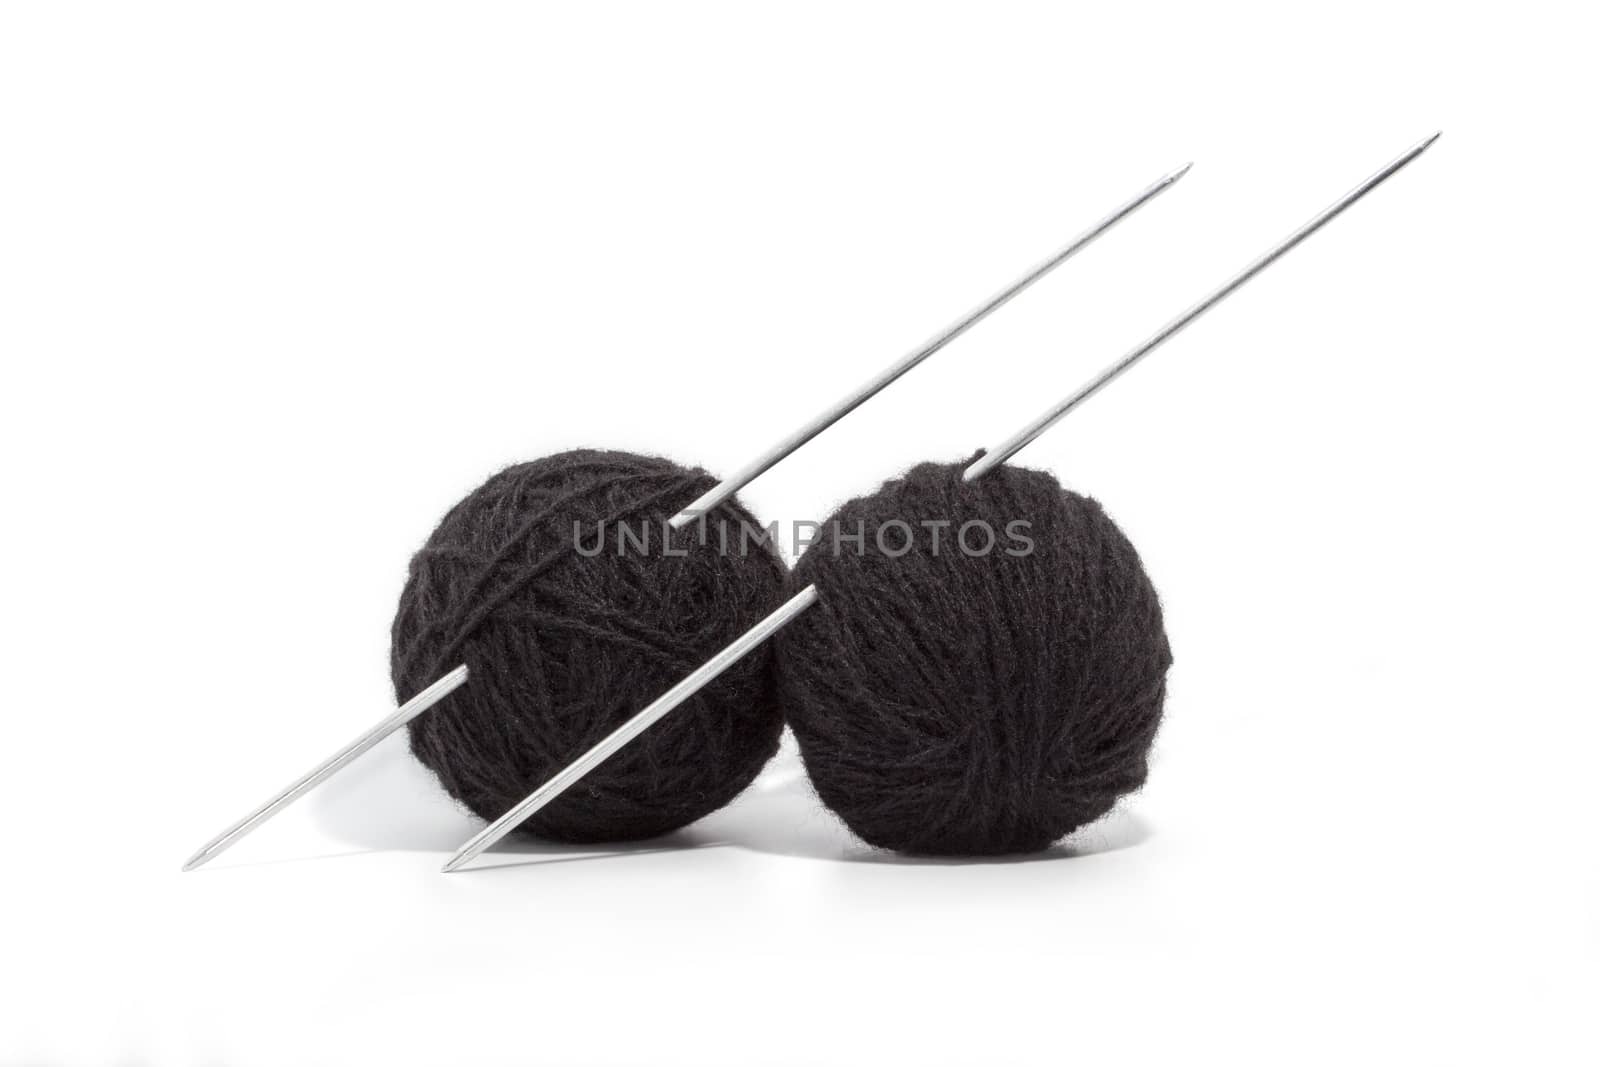 balls of yarn and knitting needles by Olvita